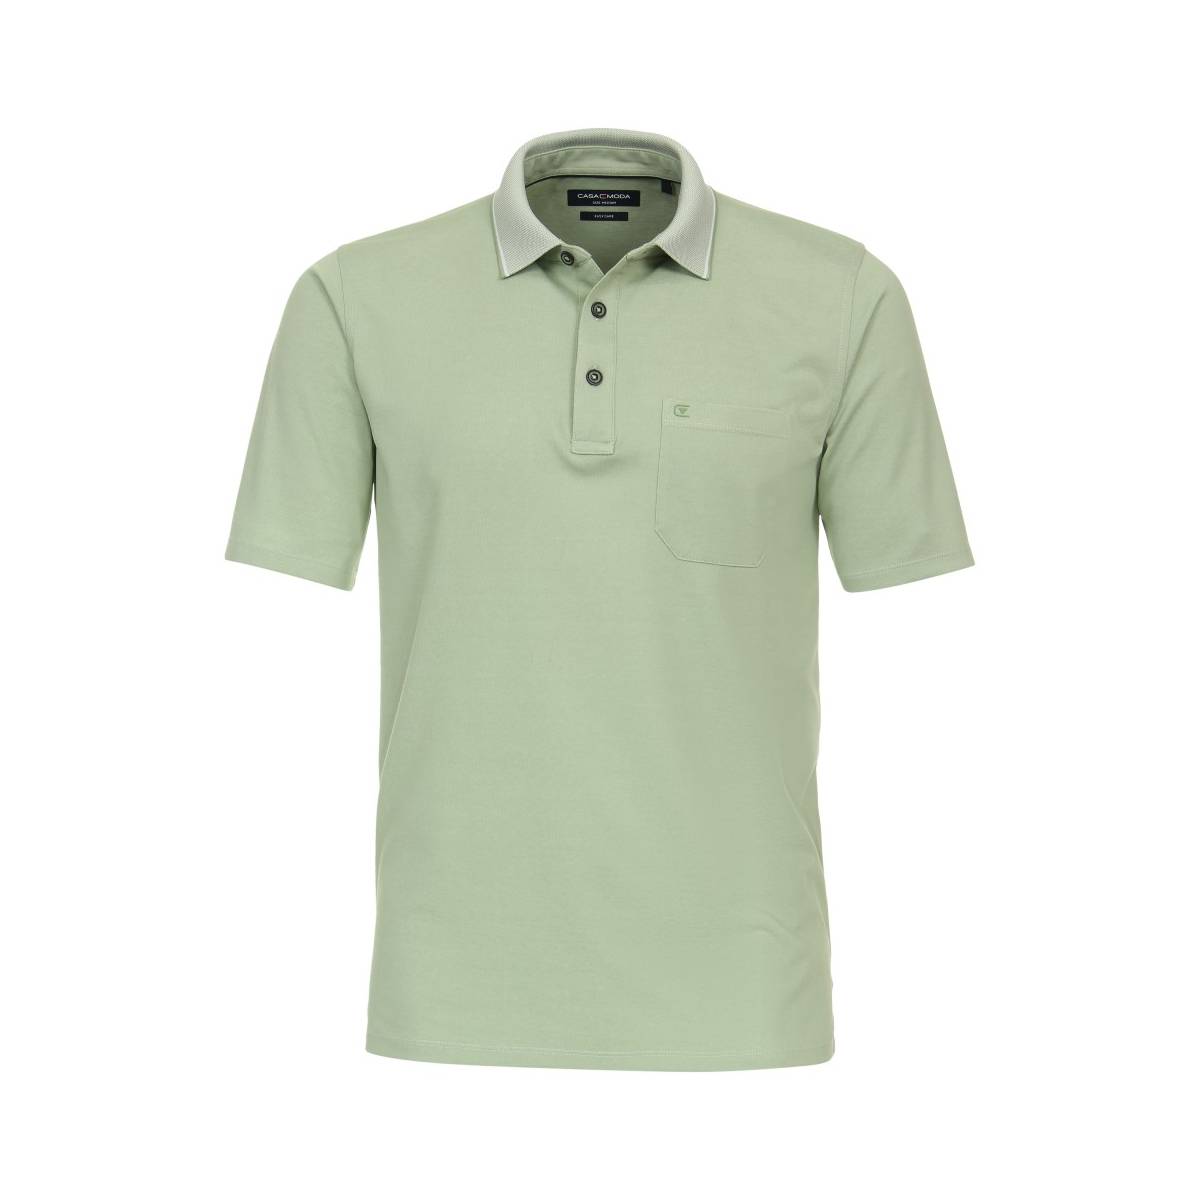 CASA MODA  t shirts licht groen/color -  model 993106500 - Herenkleding t shirts groen